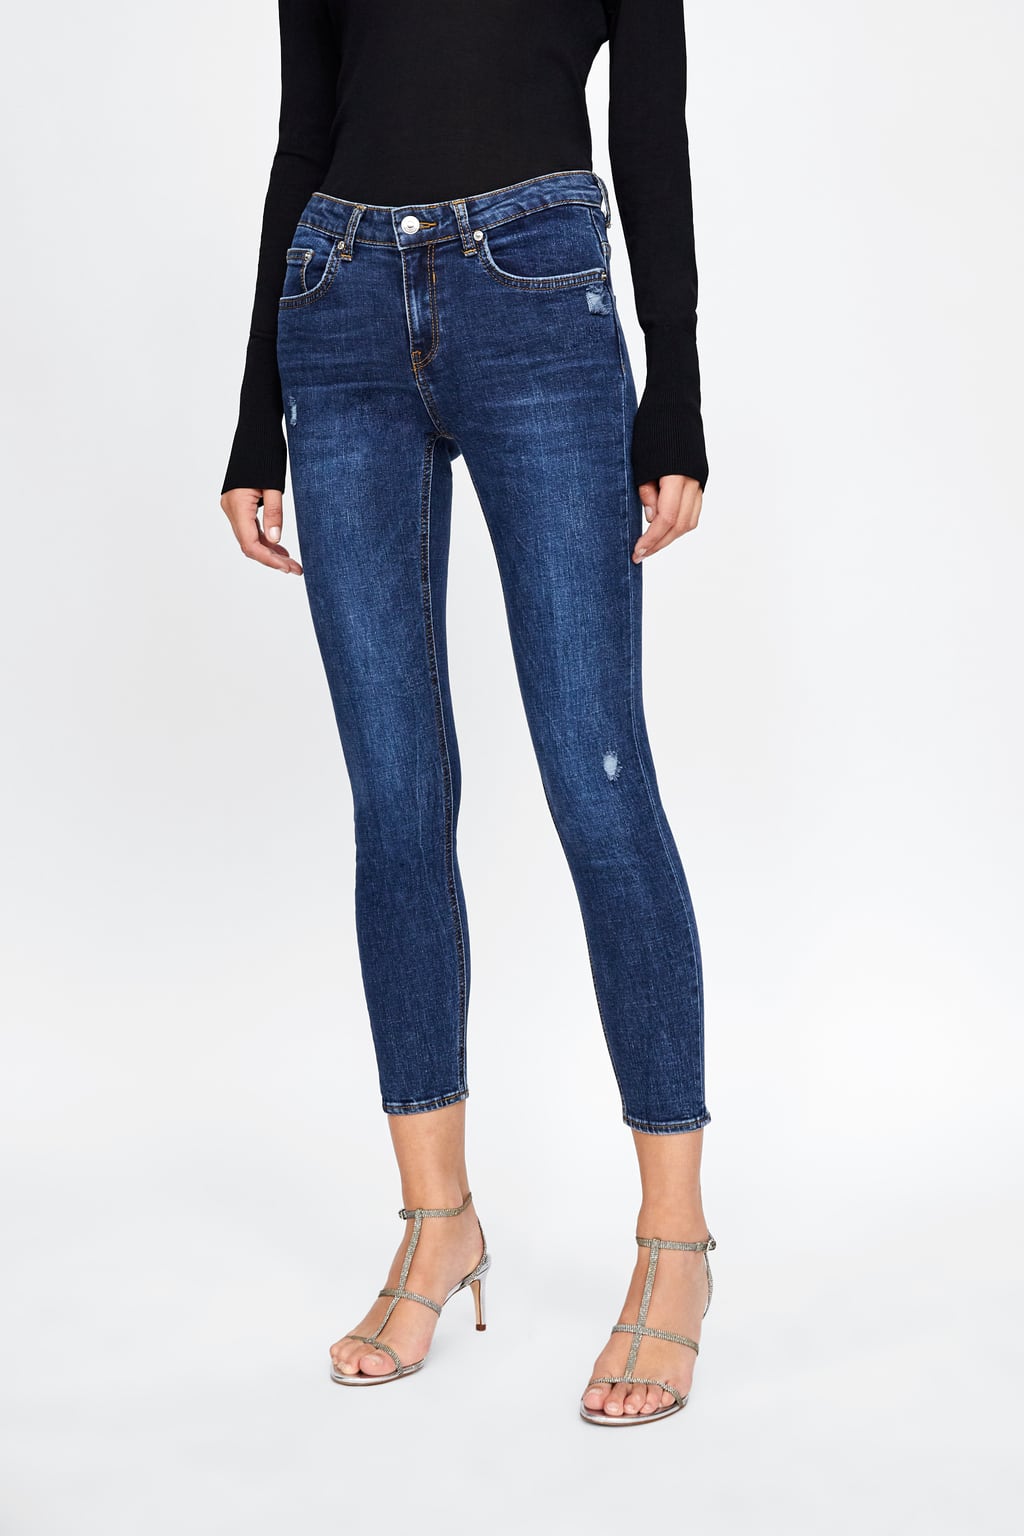 Best Skinny Jean Styles at Zara 